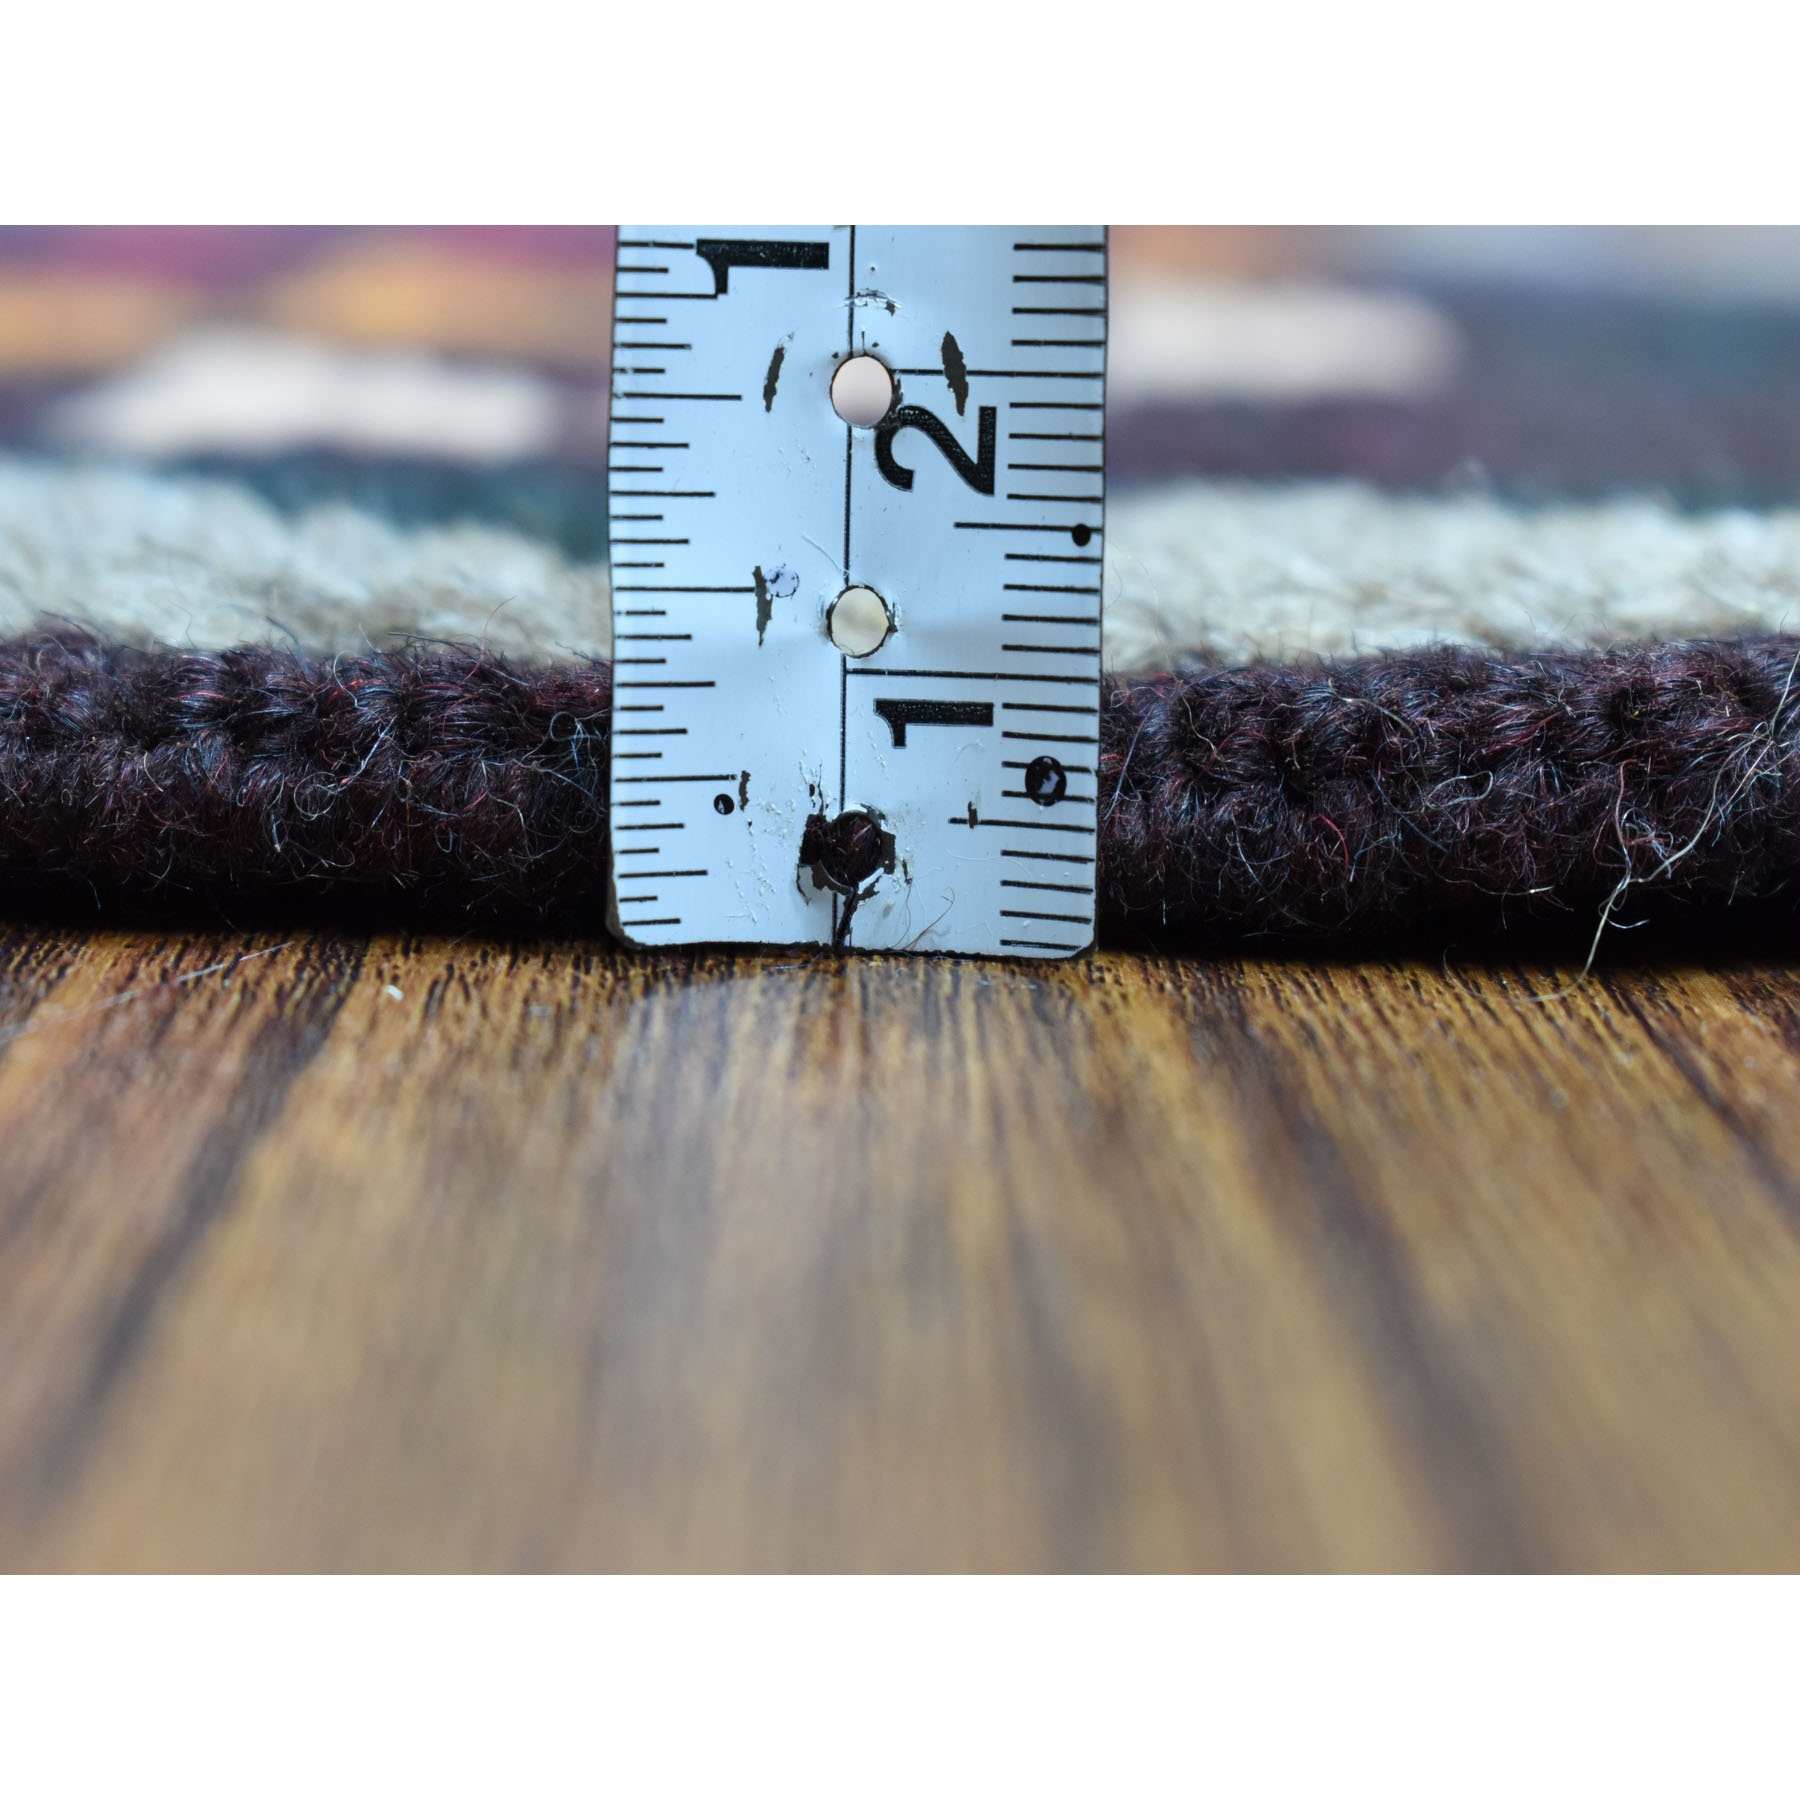 6'x8' Black Colorful Afghan Baluch Geometric Design Hand Woven Pure Wool Runner Oriental Rug 